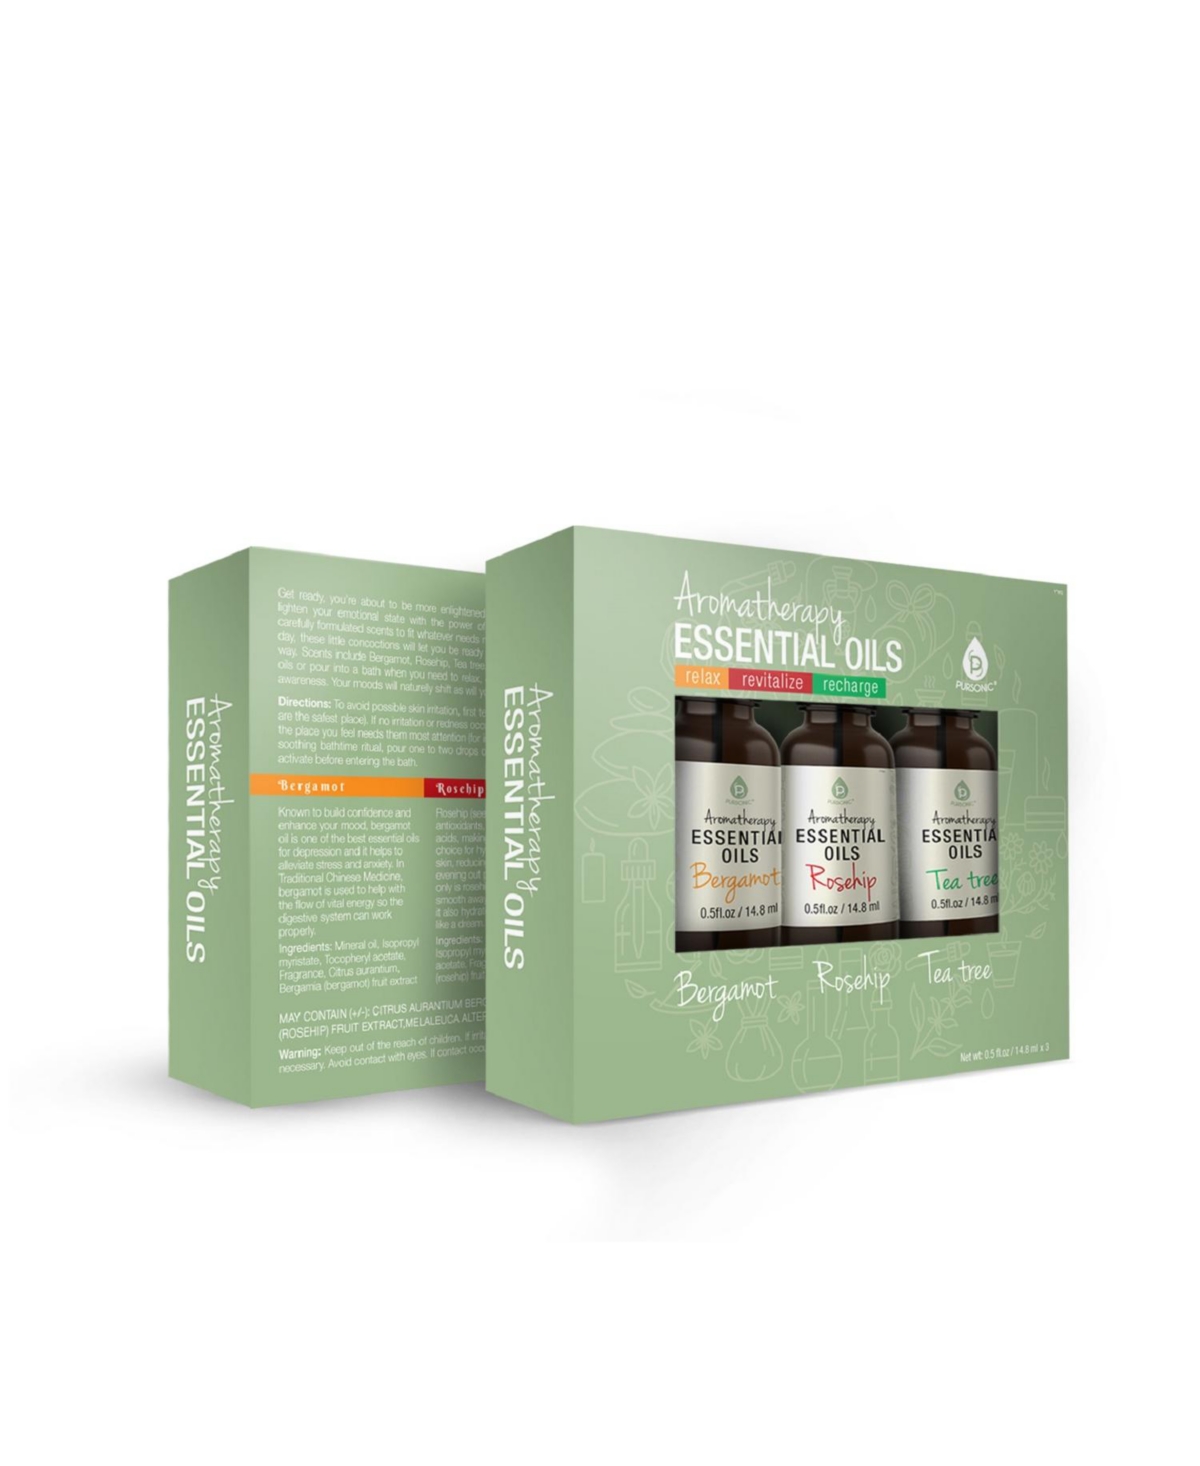 Aromatherapy Essential Oils (Bergamot, Rosehip, Tea Tree) - Natural